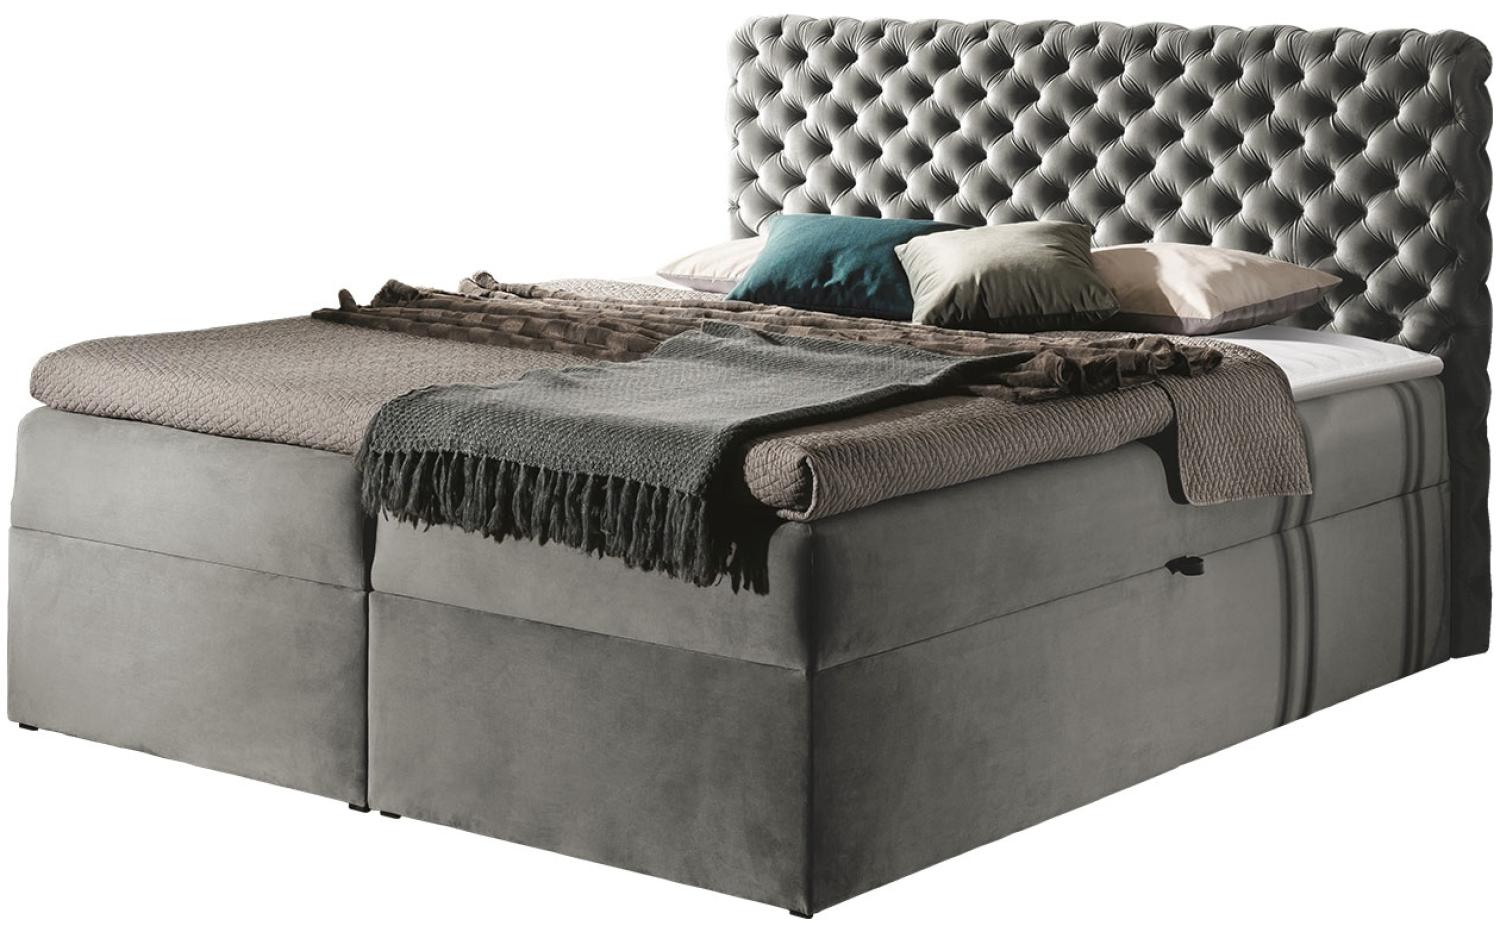 Mirjan24 'Serrula' Boxspringbett mit Bettkästen, Taschenfederkern-Matratze & Topper, Stoff grau, 120 x 200 cm Bild 1